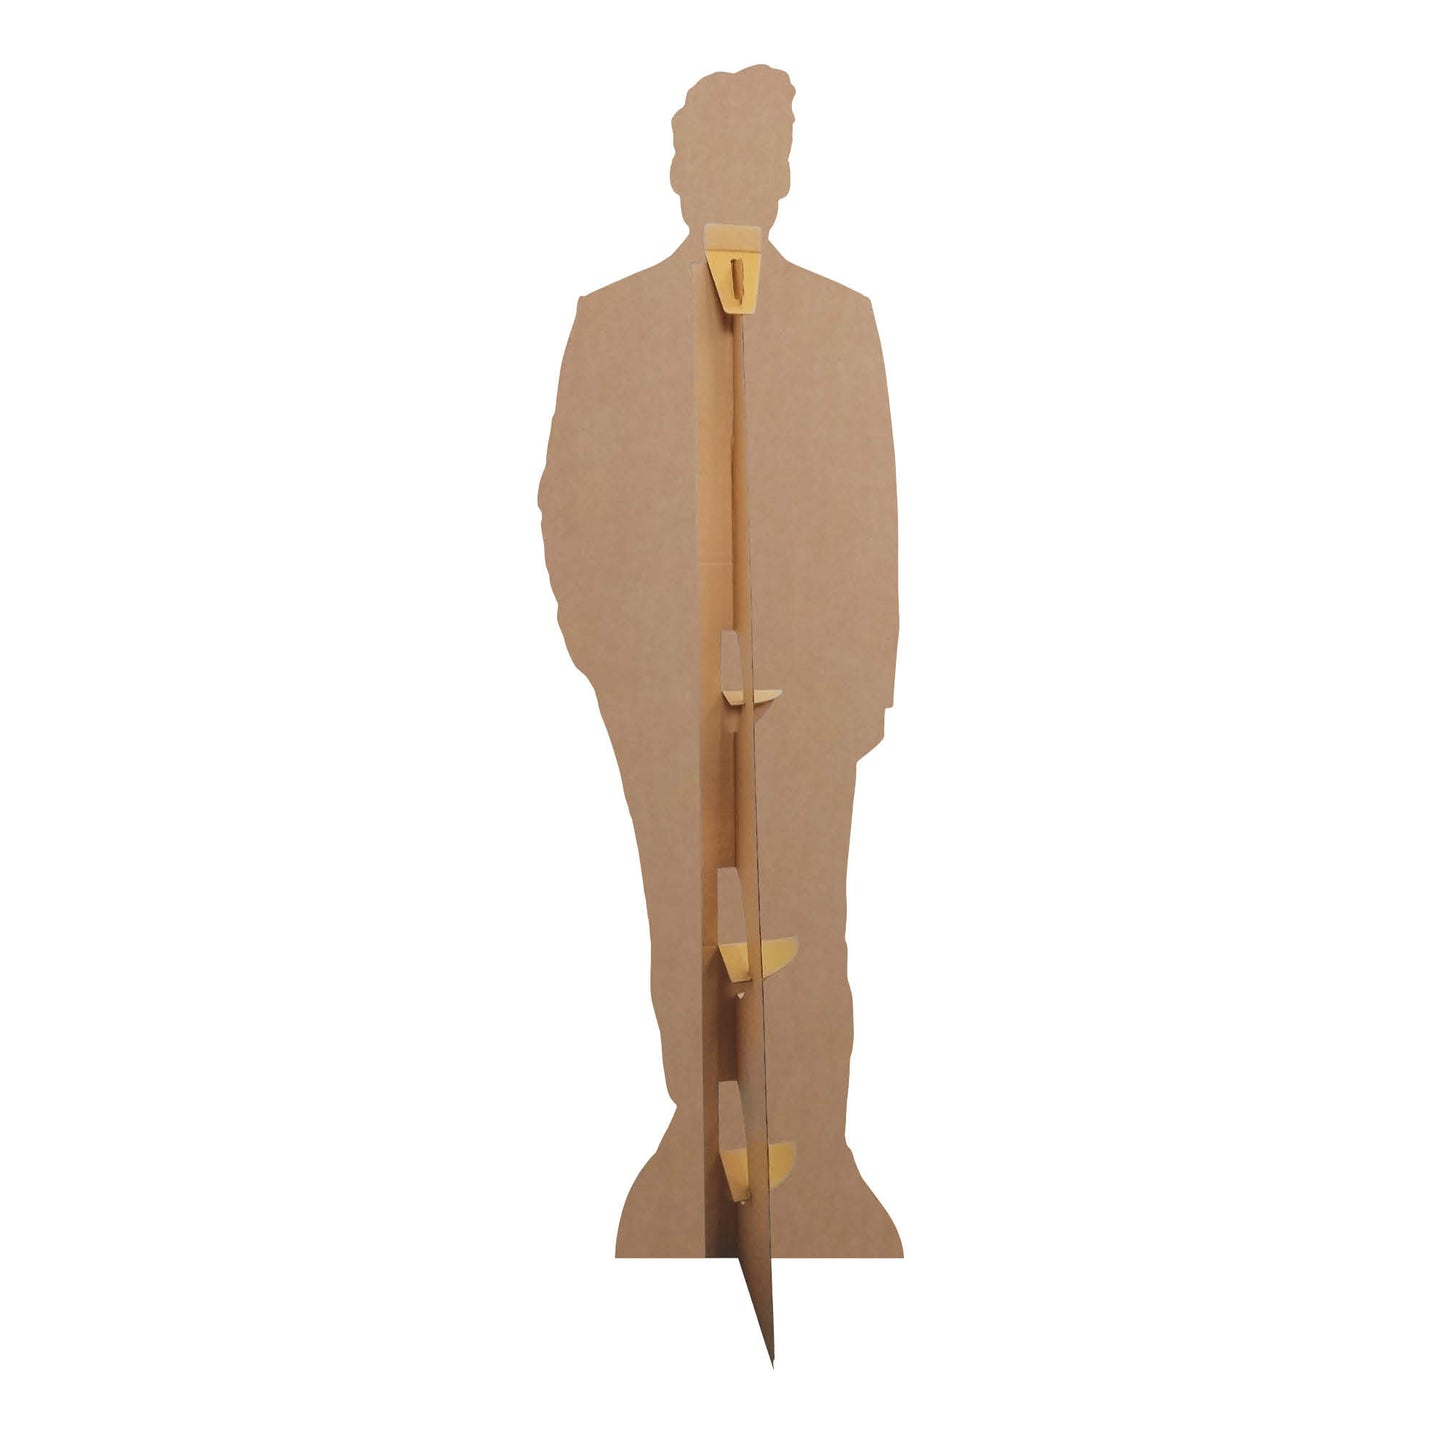 CS816 Richard Madden Bowtie Bodyguard Height 179cm Lifesize Cardboard Cut Out With Mini